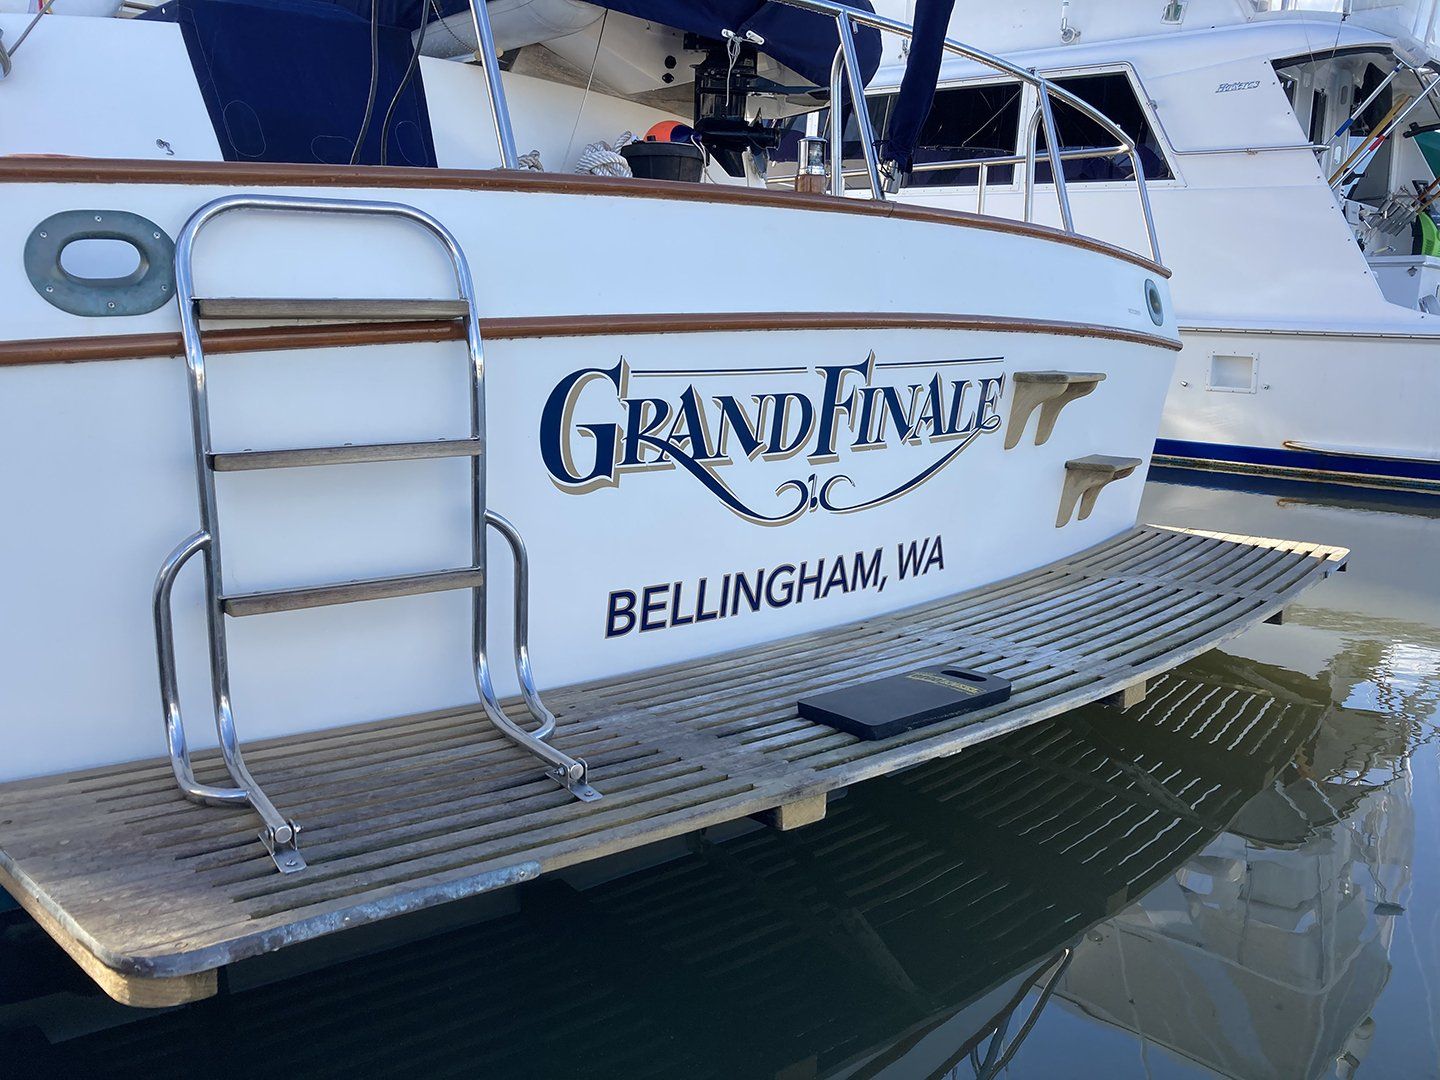 grandfinale boat name